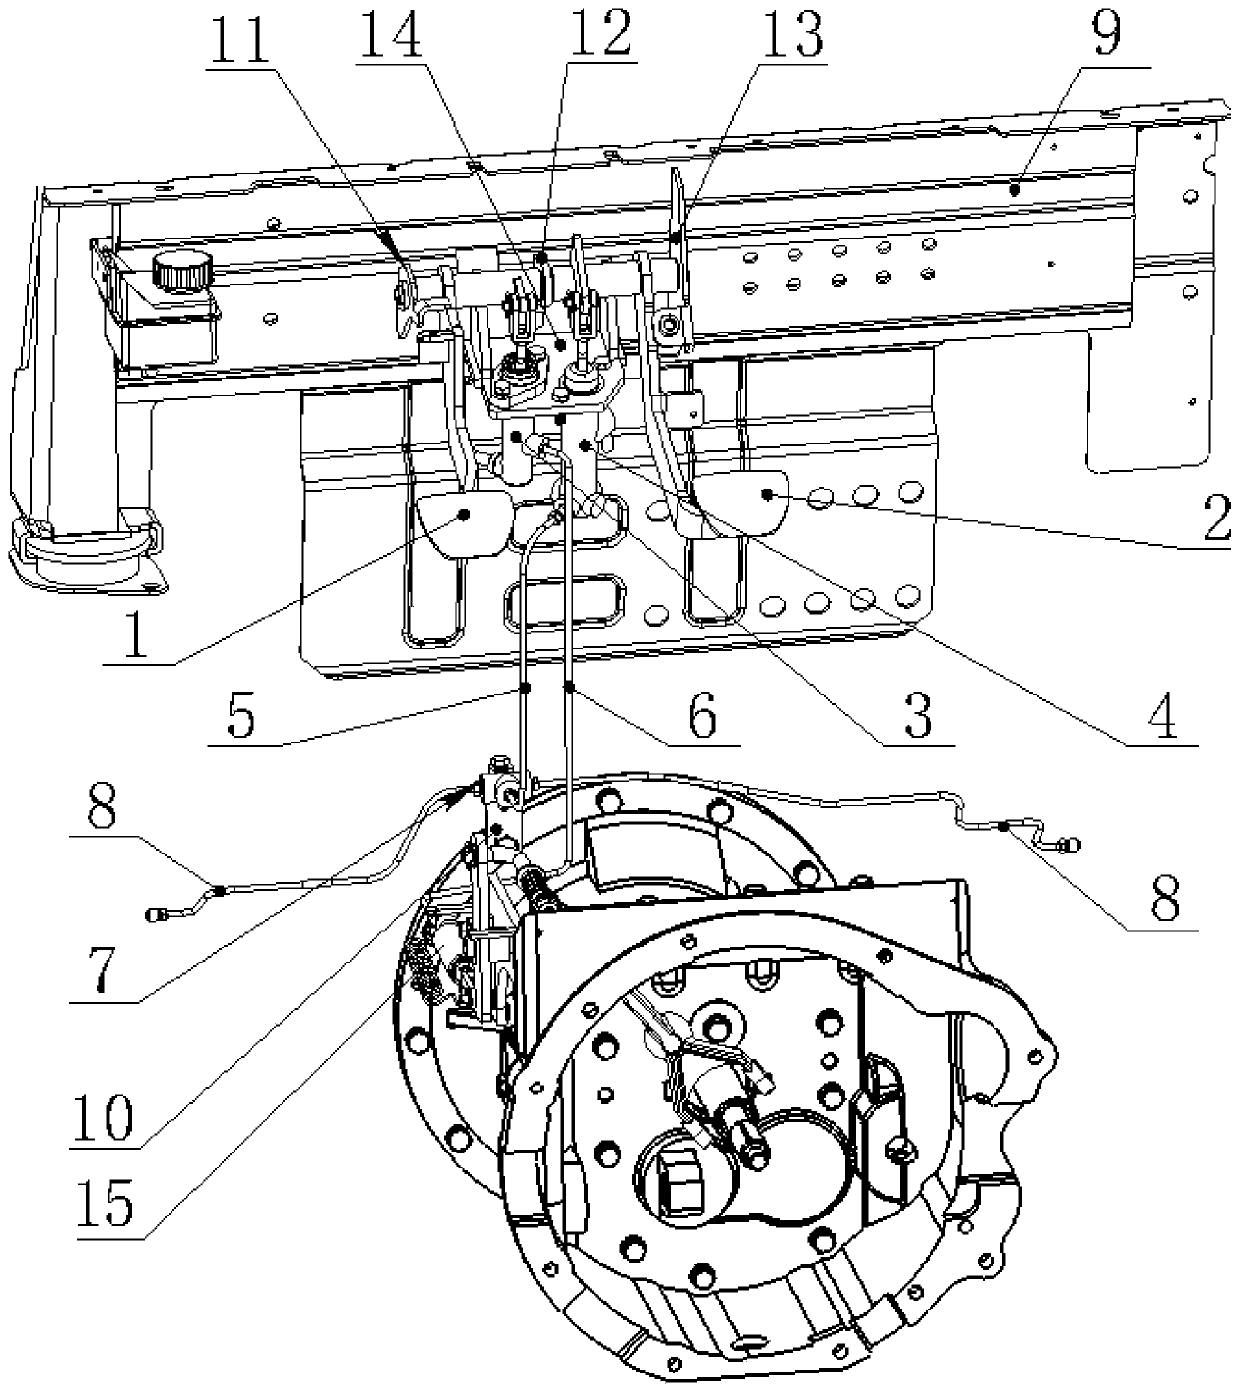 Hydraulic-type clutch and brake control system